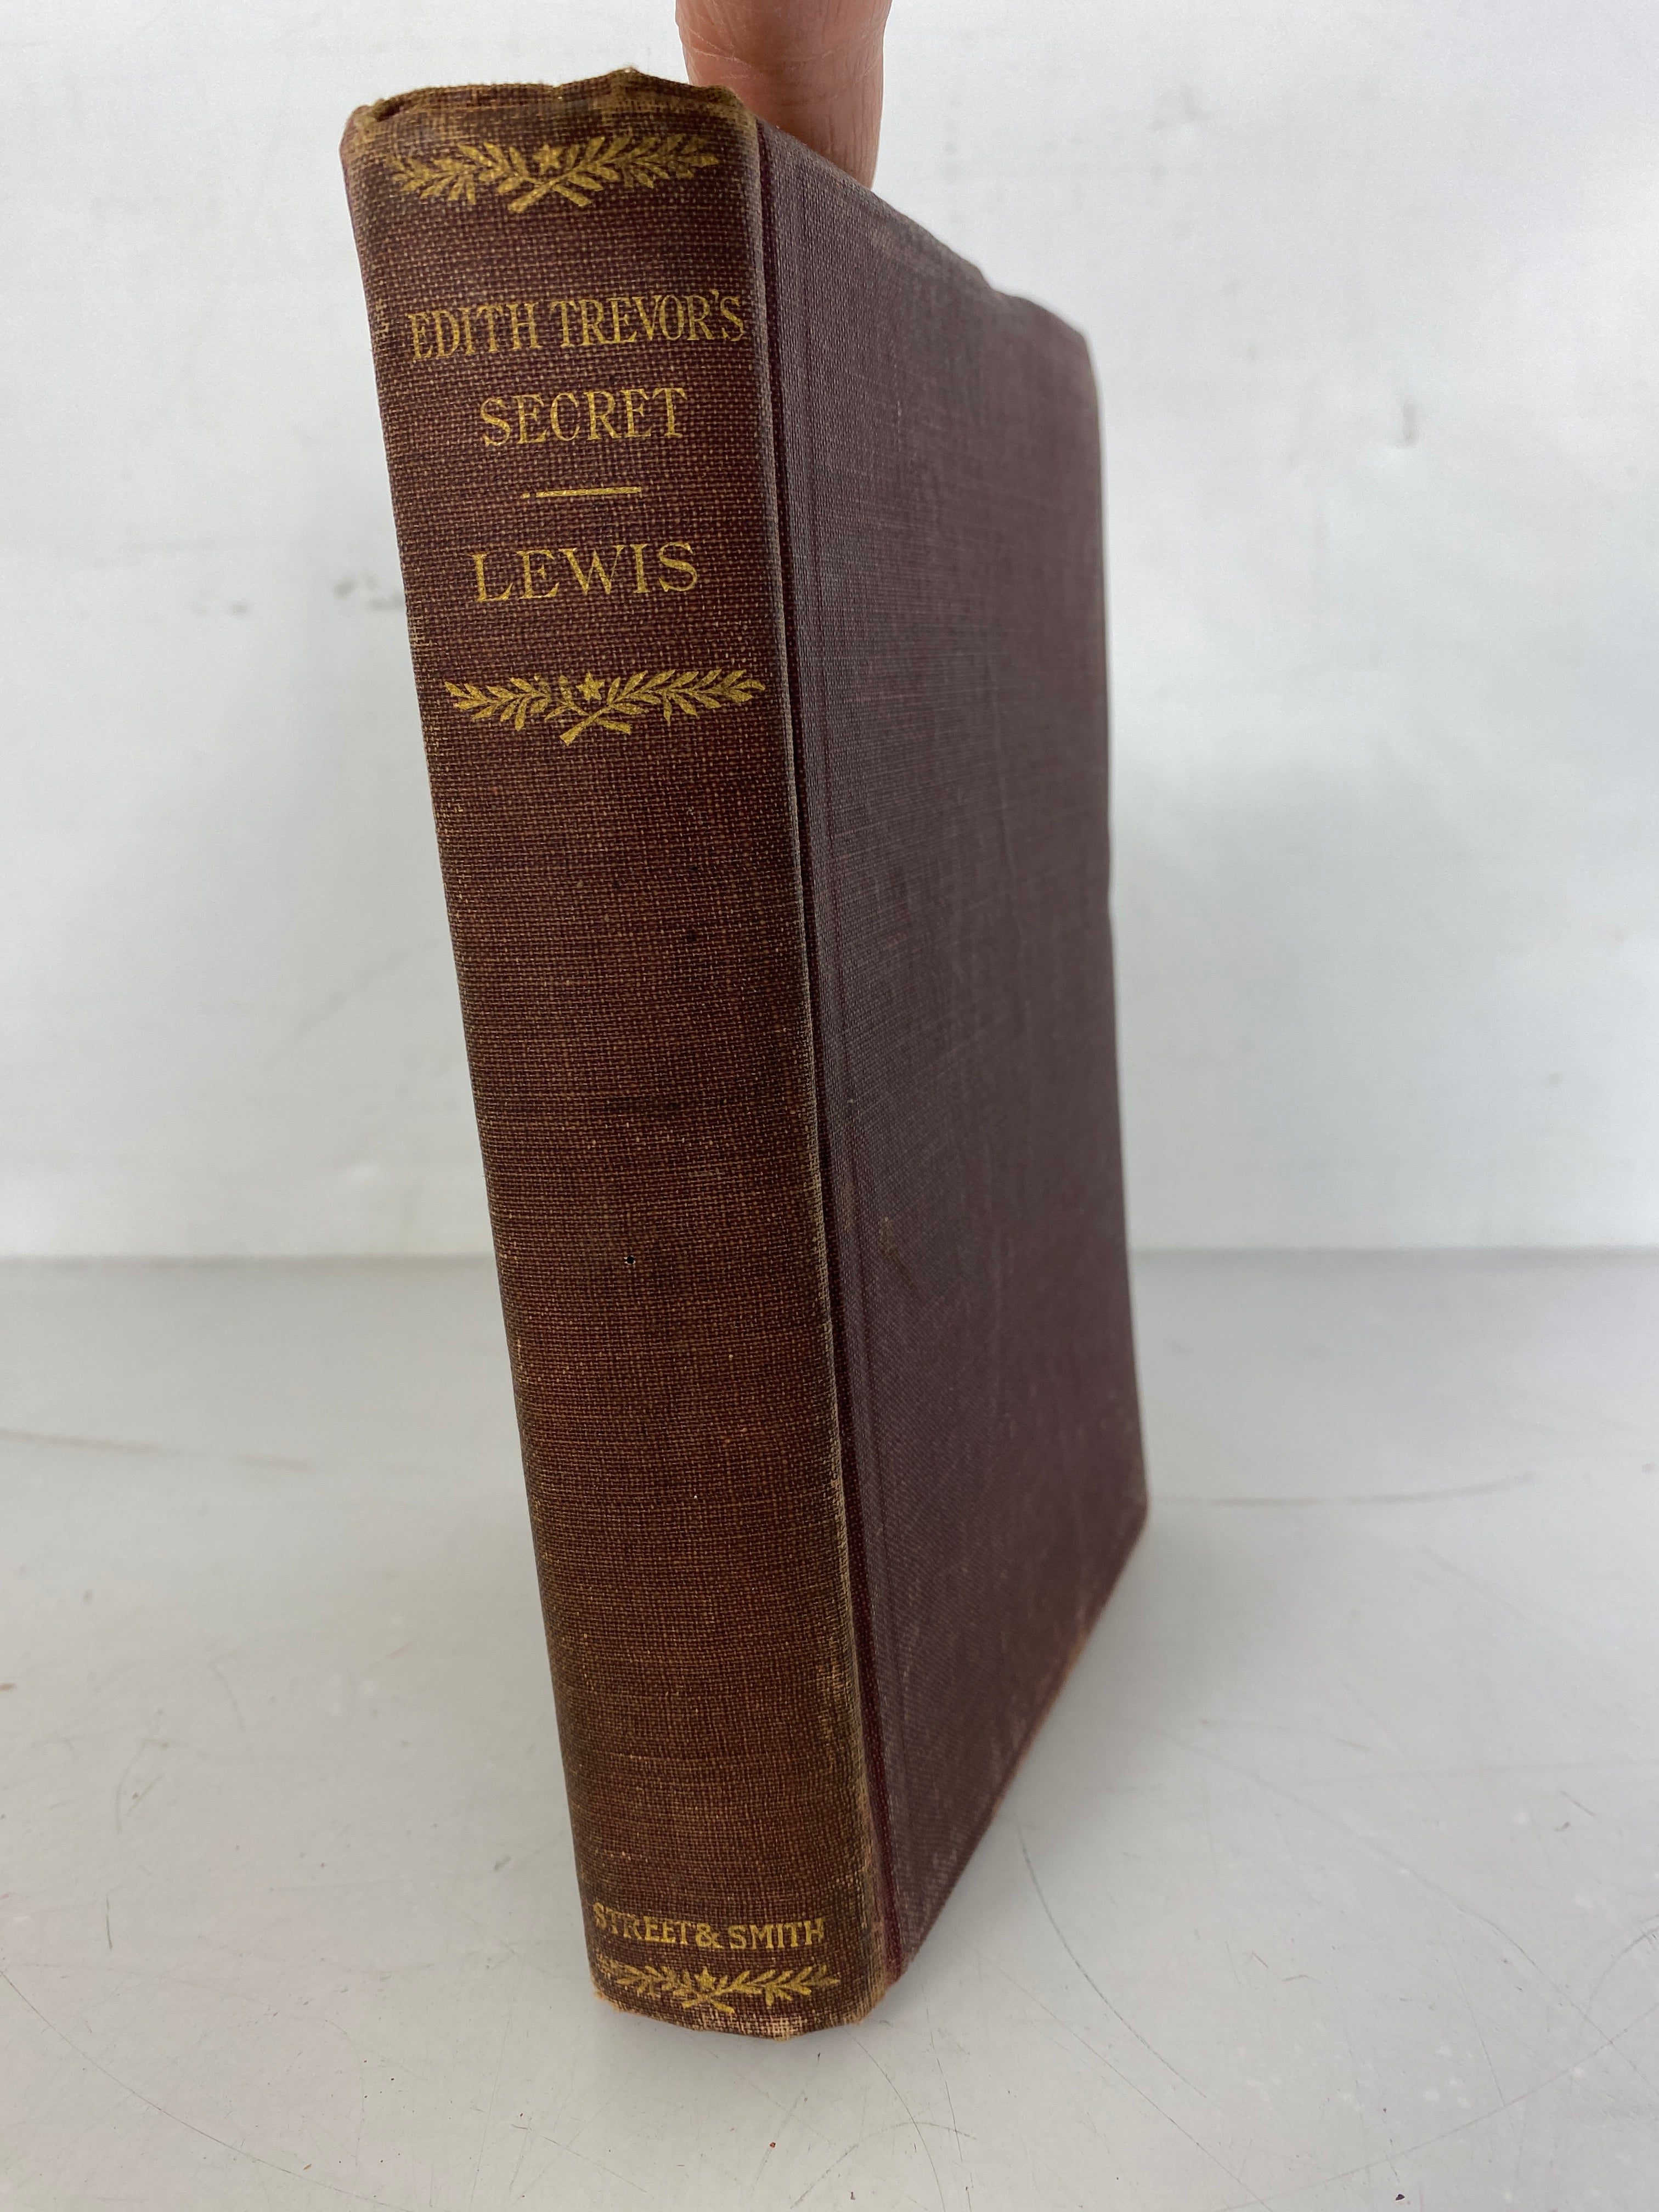 Edith Trevor's Secret by Harriet Lewis 1892 Street & Smith HC Rare Antique